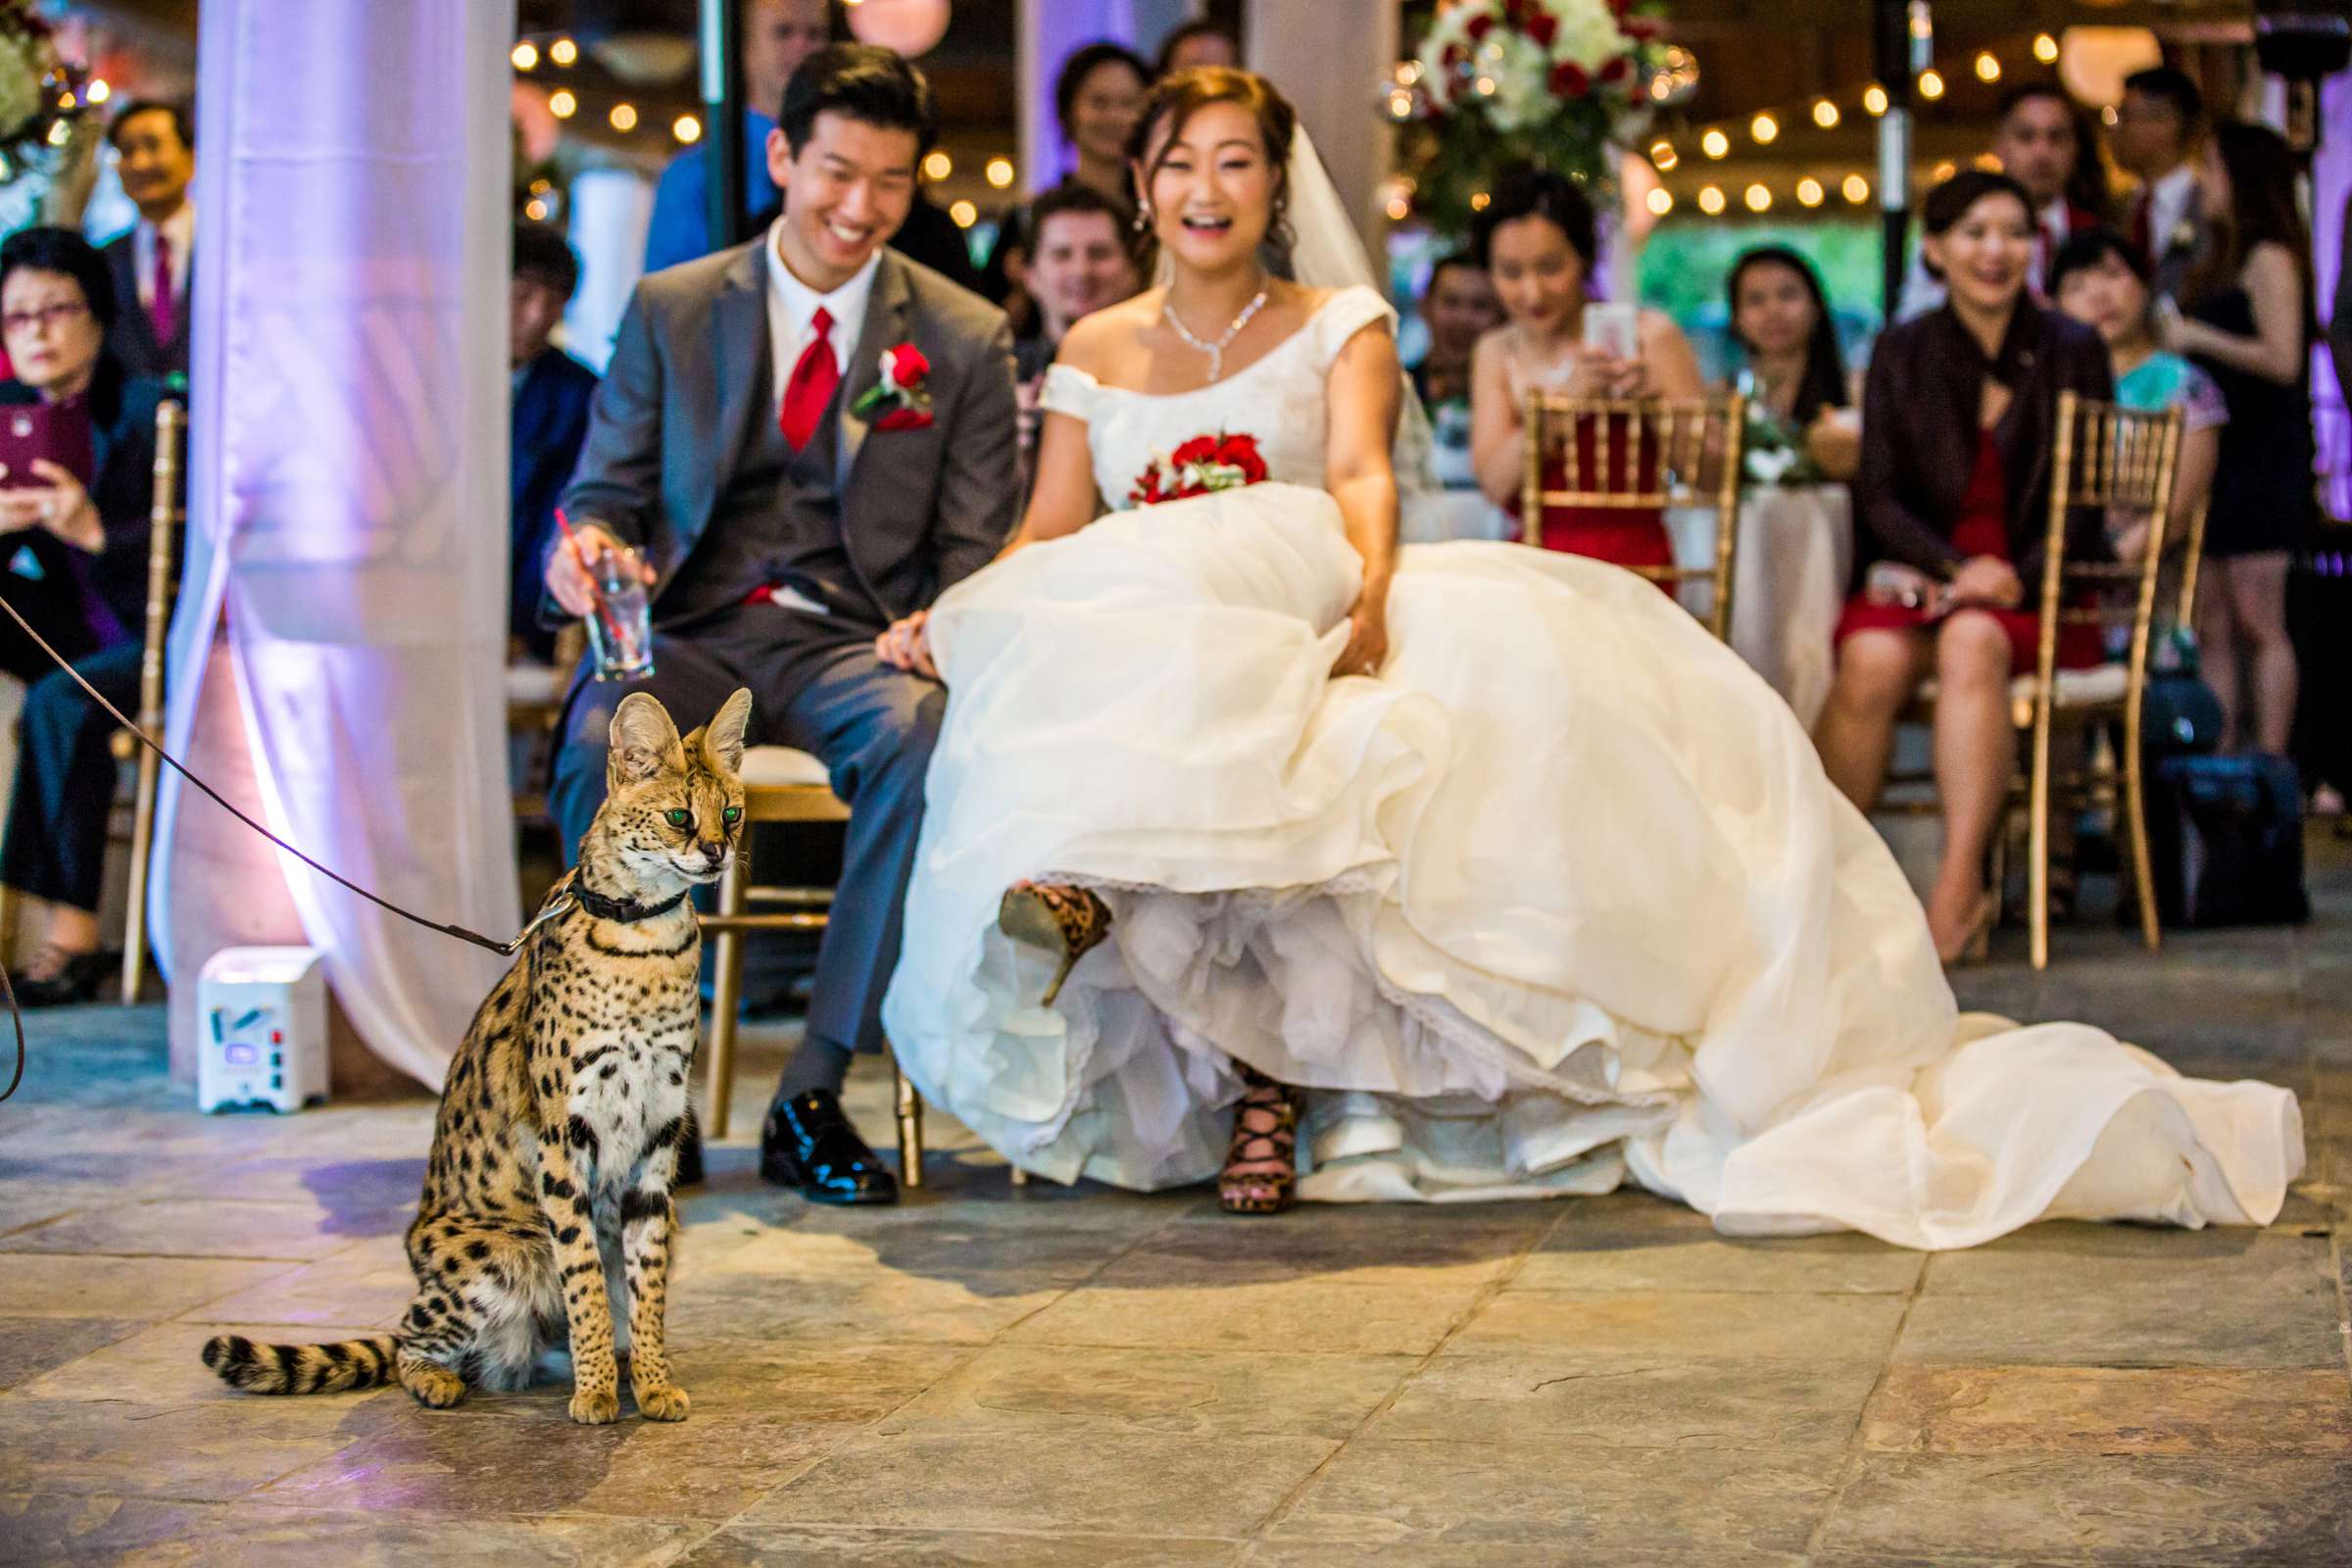 Safari Park Wedding, Jocelyn and Heras Wedding Photo #1 by True Photography